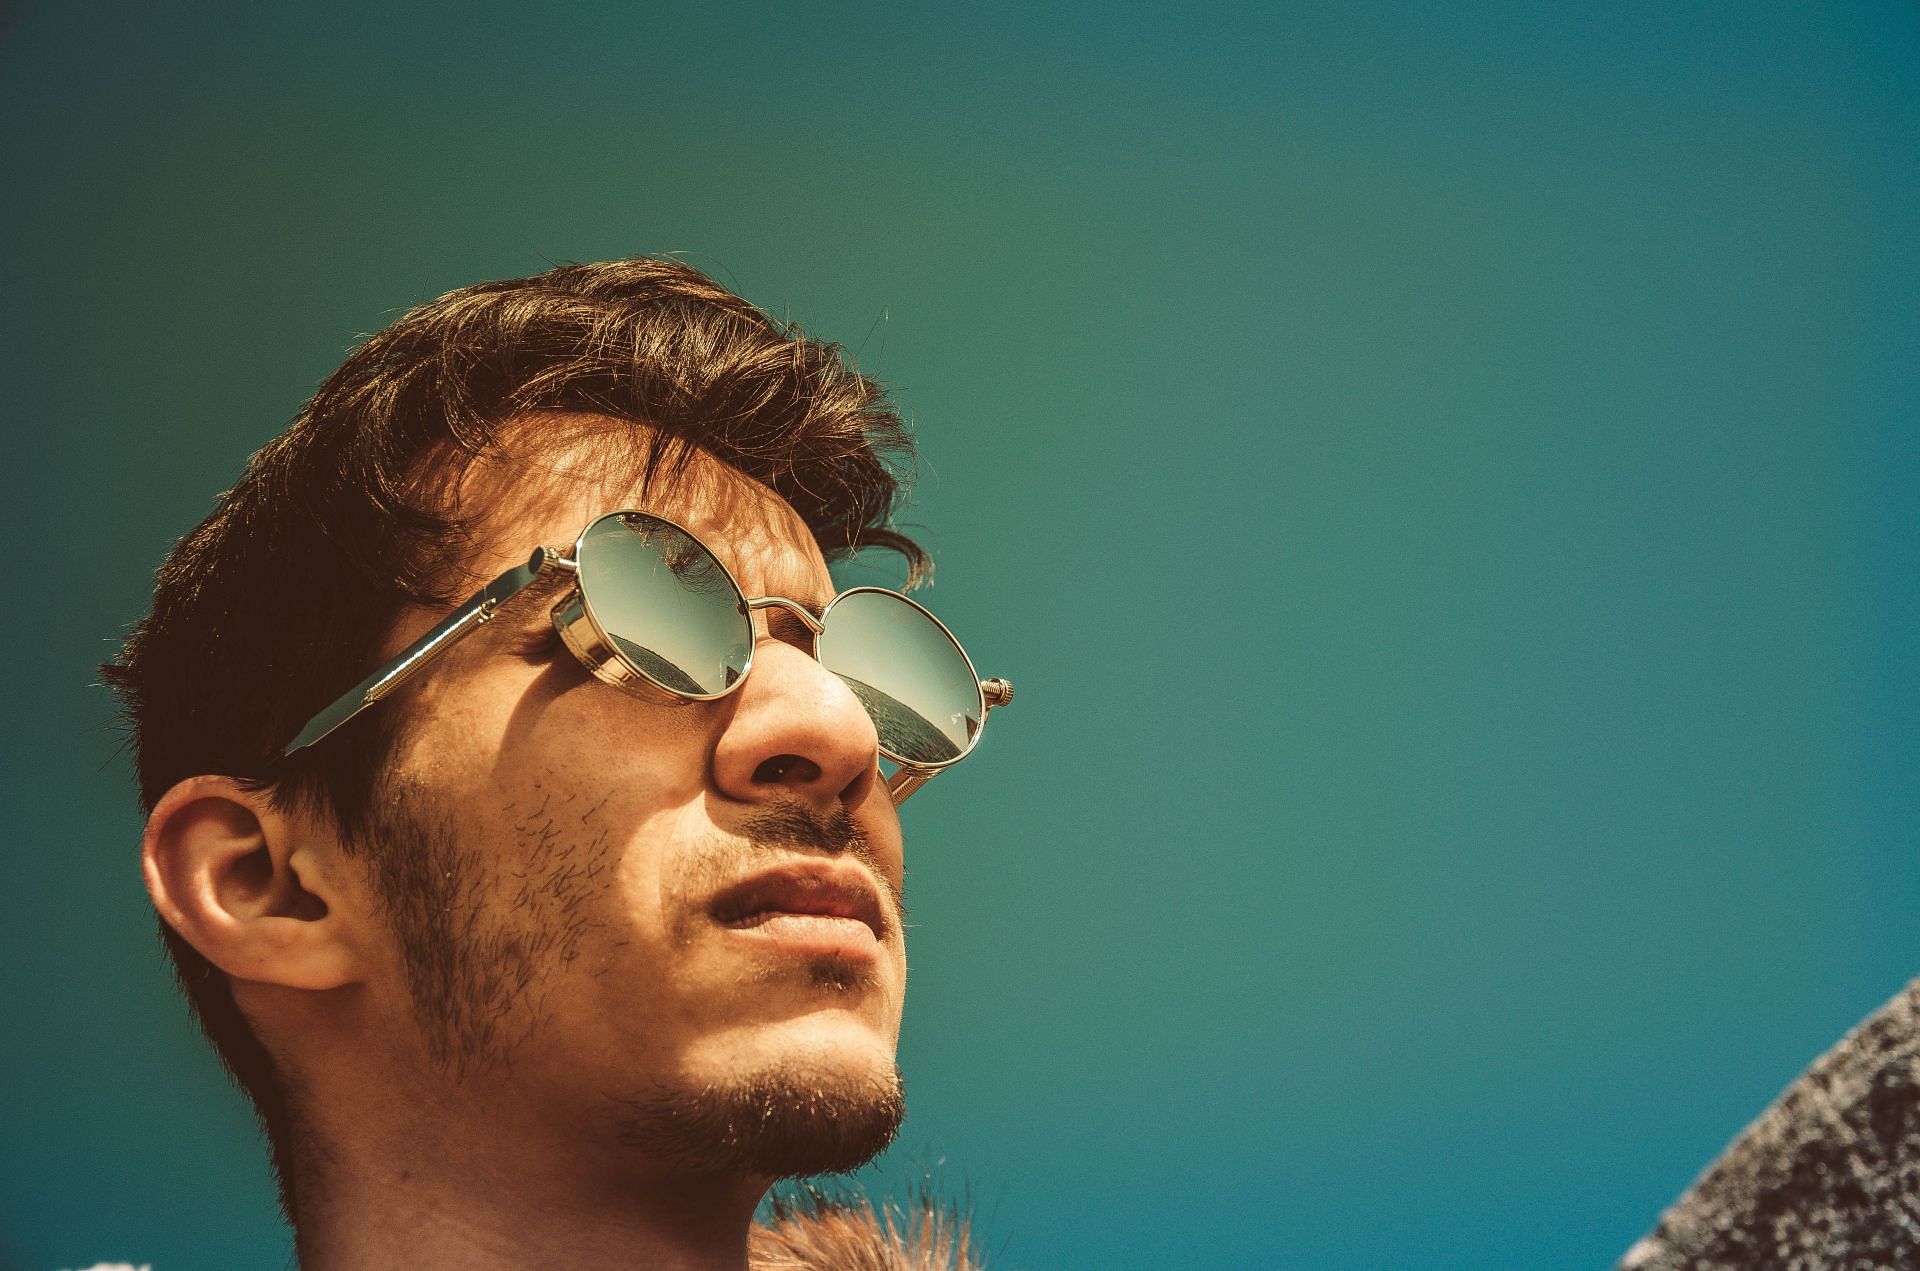 Wear sunglasses to avoid eye strain. (Image via Pexels/Asim Alnamat)